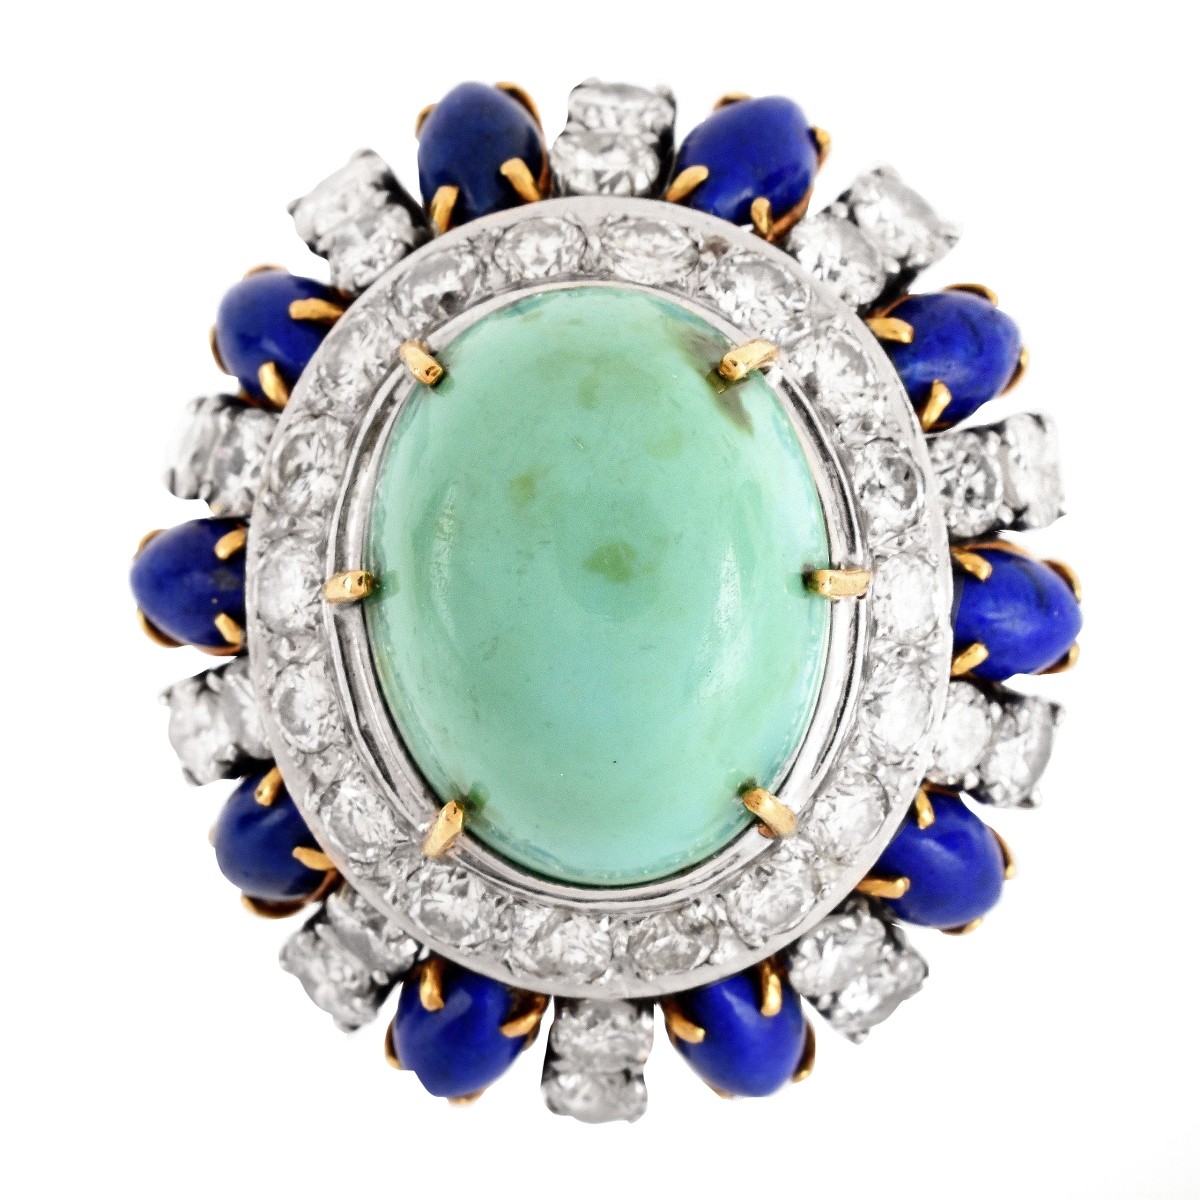 Vintage Diamond, Turquoise, Lapis 18K Ring